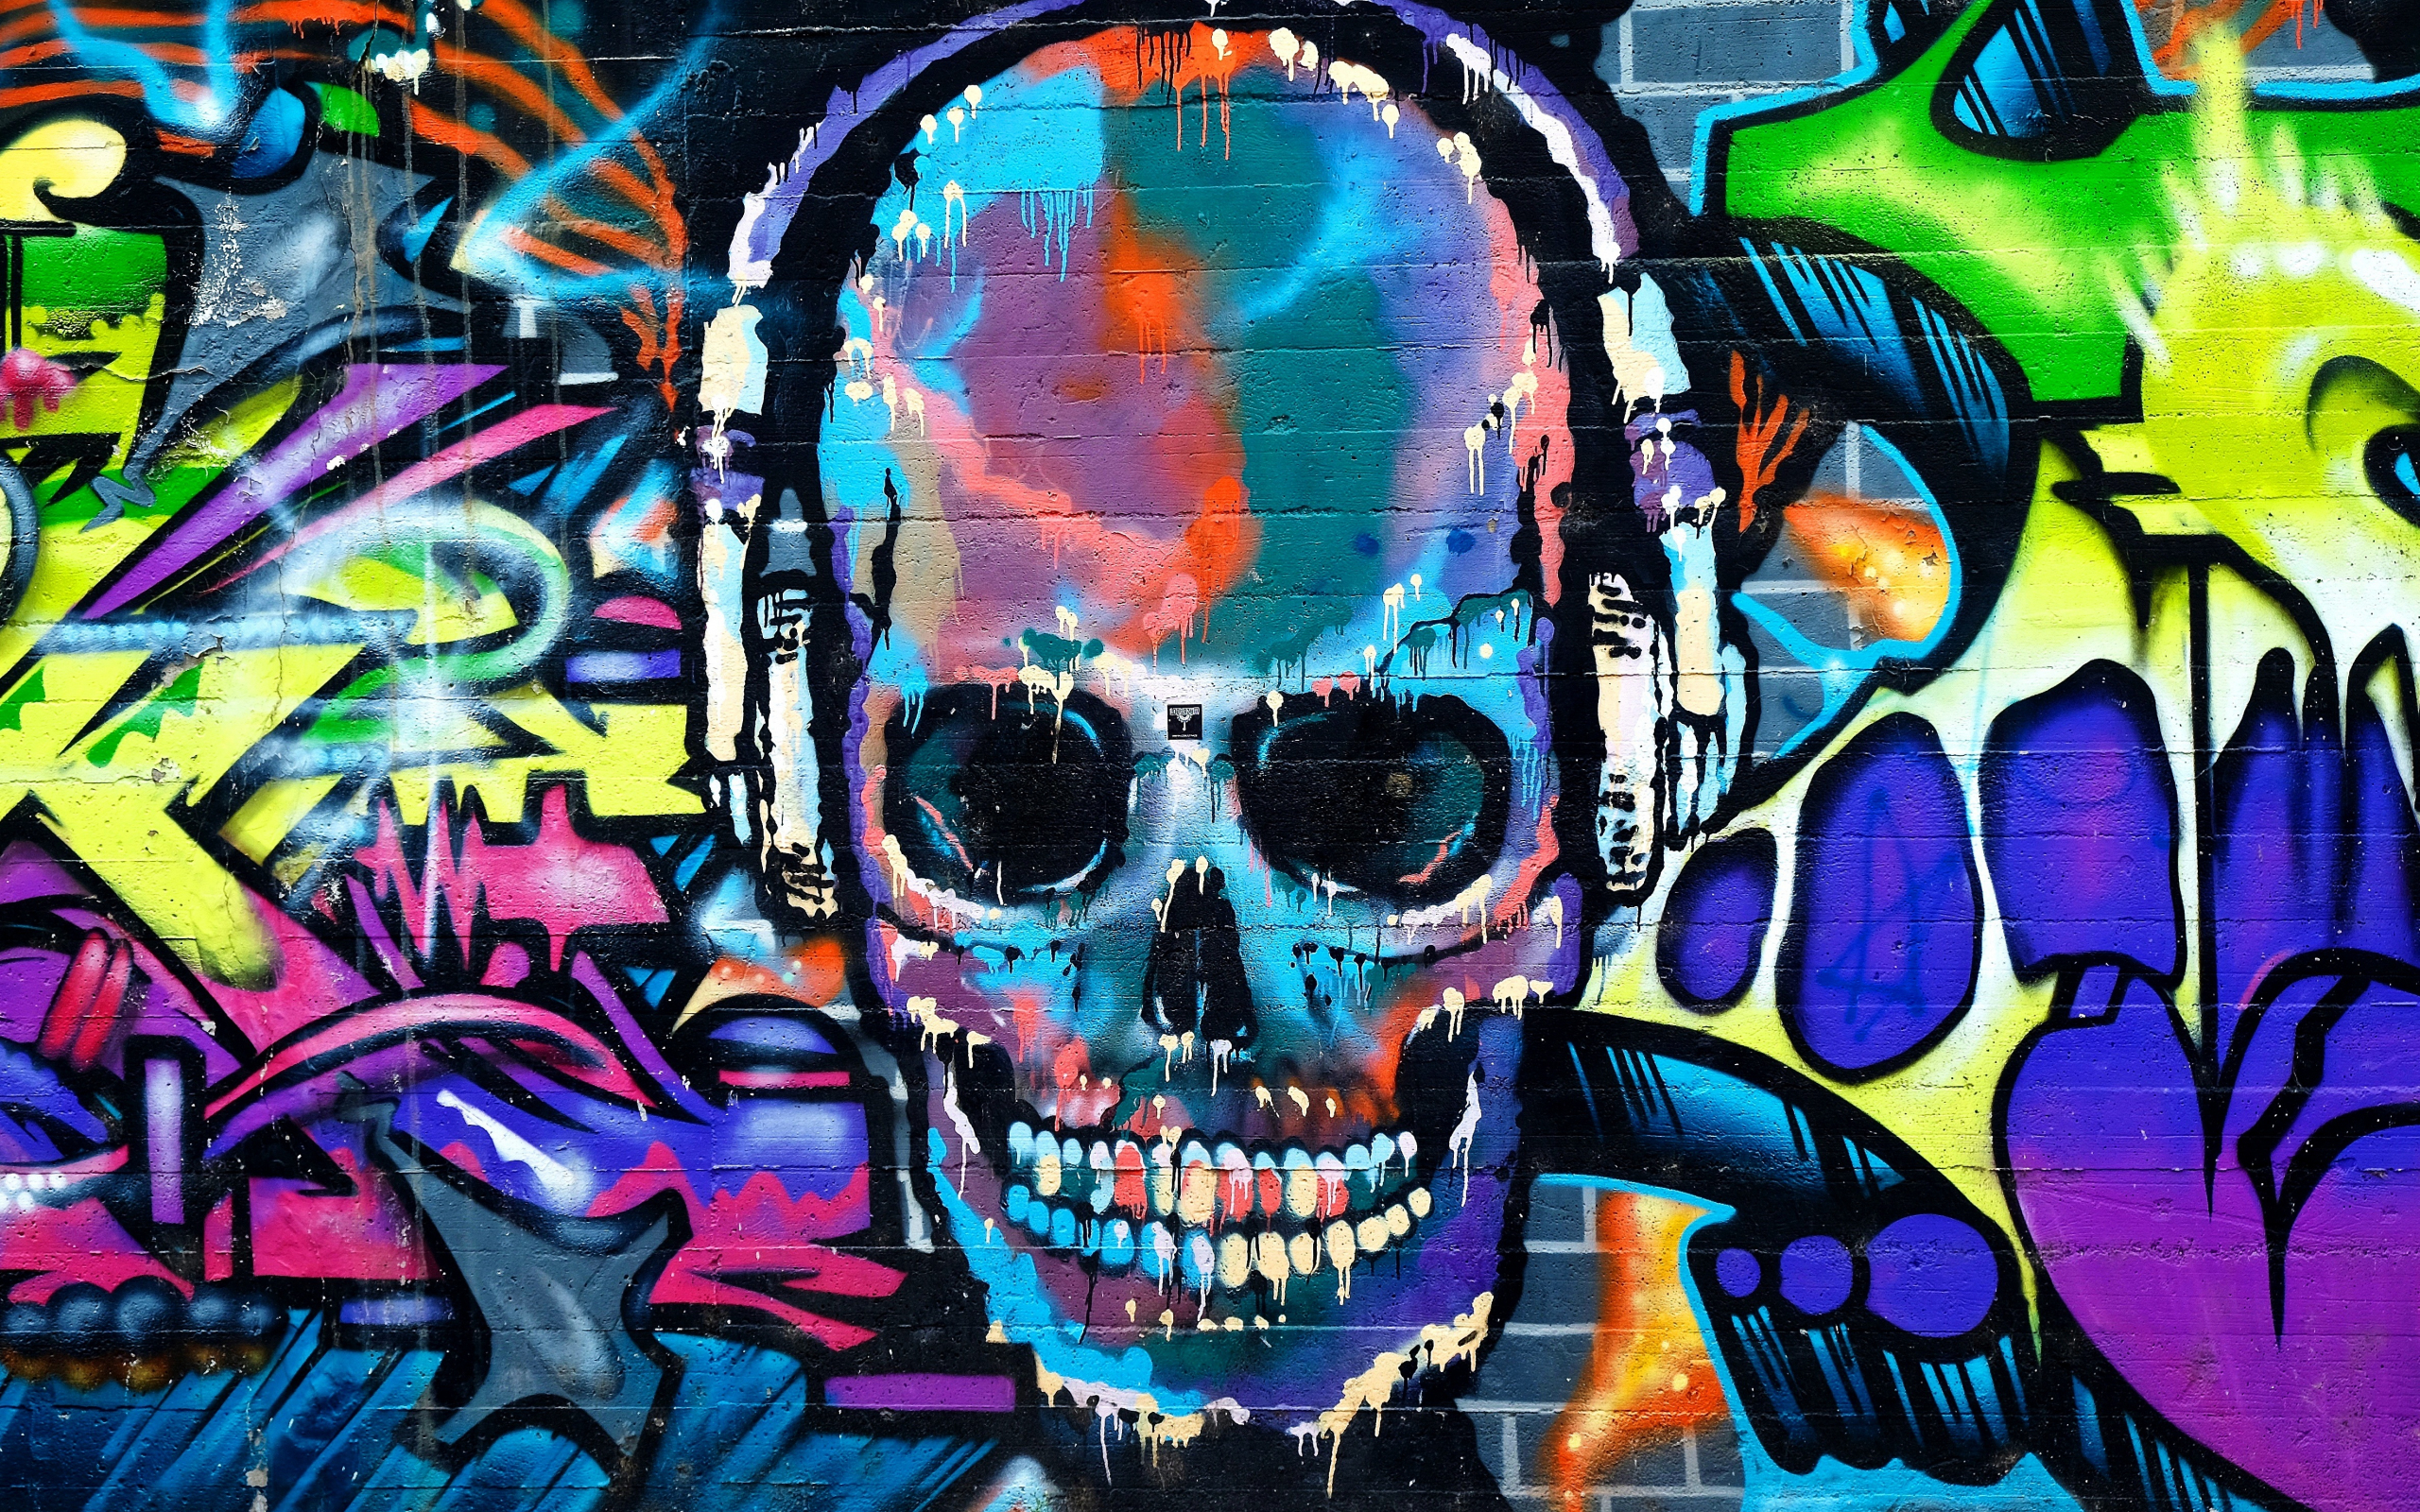 Download wallpaper 2560x1600 graffiti, skull, colorful, street art, dual  wide 16:10 2560x1600 hd background, 7077